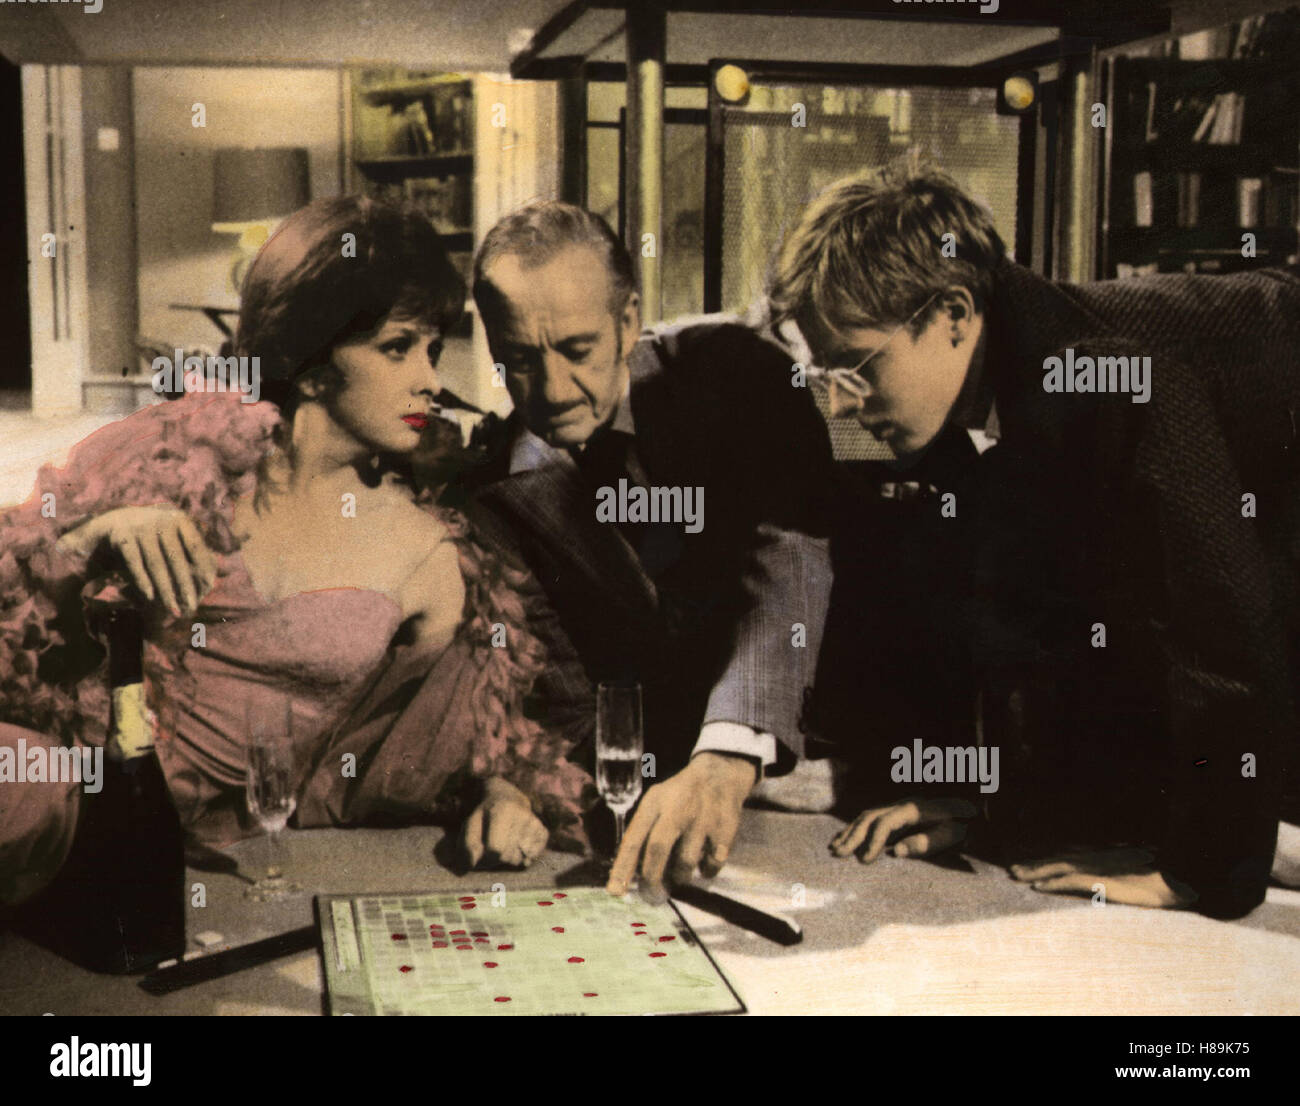 König, Dame, Bube, (KING, QUEEN, KNAVE) USA-D 1971, Regie: Jerzy Skolimowsky, GINA LOLLOBRIDGIDA, DAVID NIVEN + JOHN MOULDER-BROWN Stock Photo